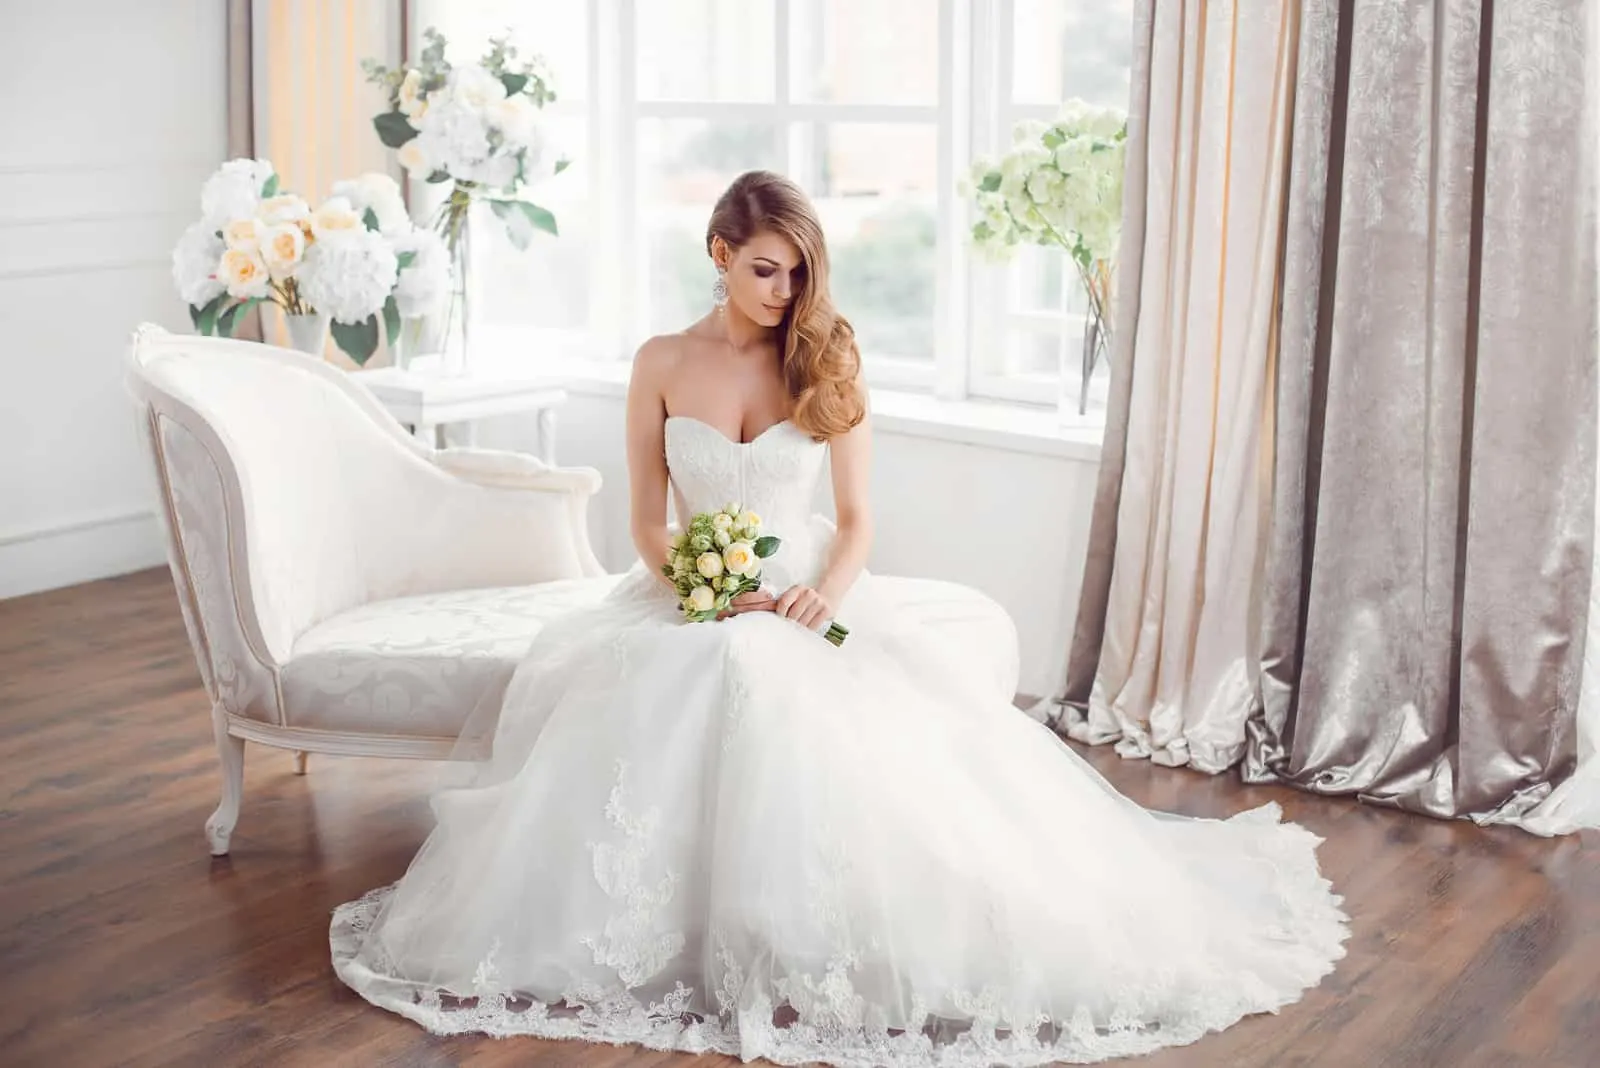 Bride in beautiful dress sitting on sofa